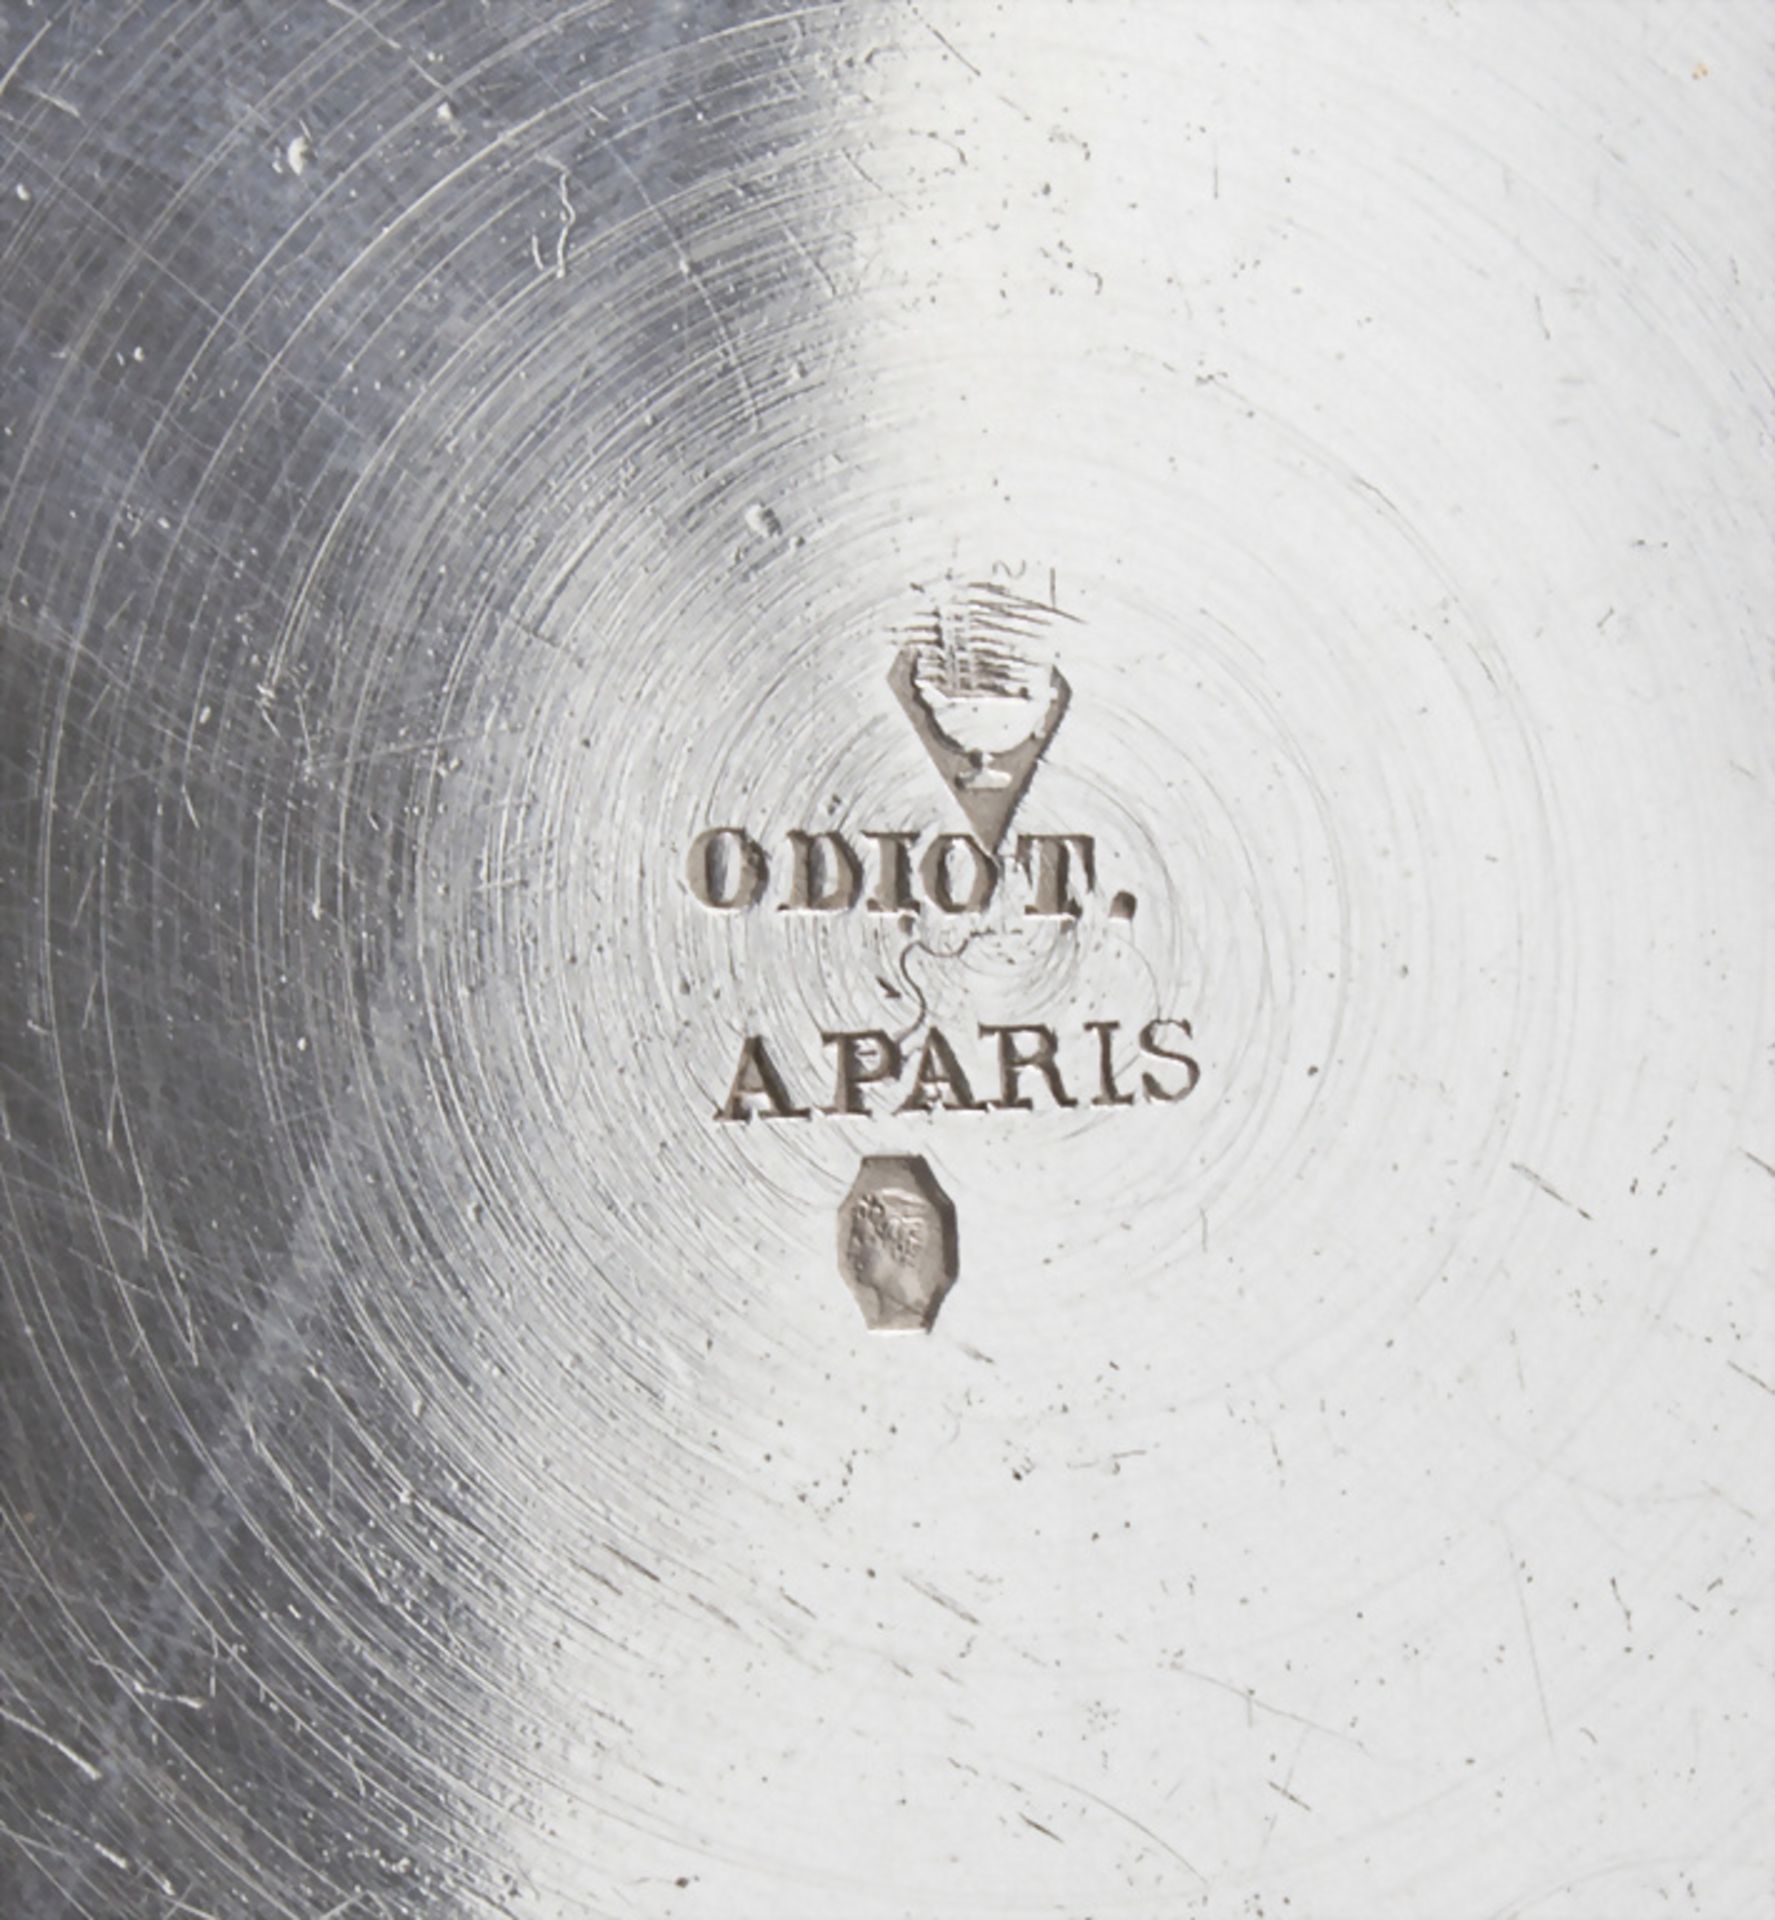 12 Silberteller / 12 assiettes en argent massif / A set of 12 silver plates, Odiot, Paris, um 1870 - Image 4 of 29